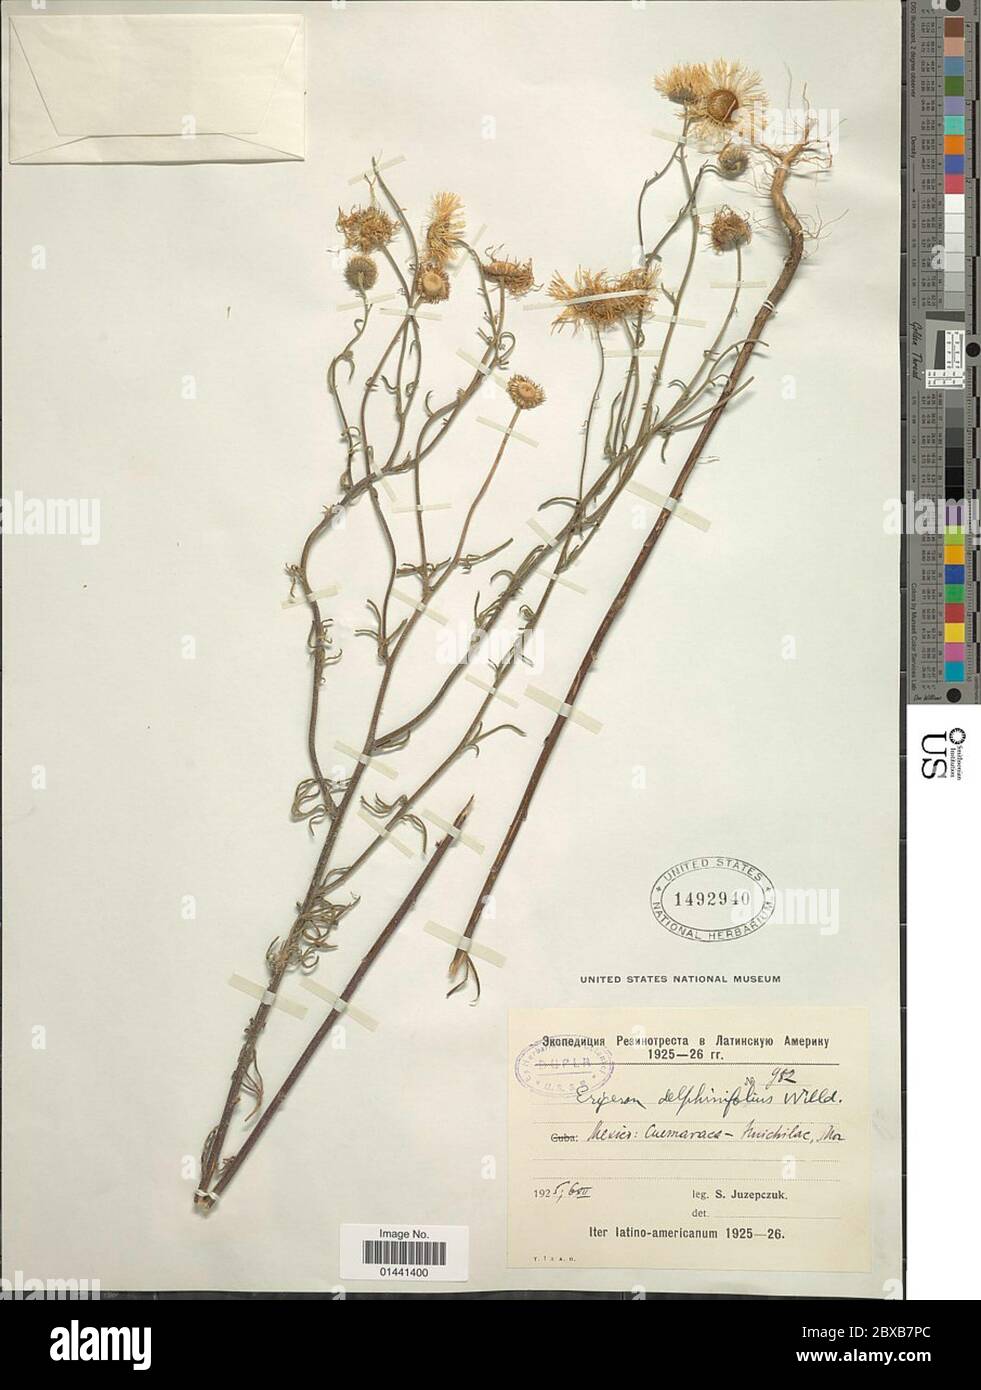 Erigeron delphinifolius Willd Erigeron delphinifolius Willd. Stock Photo